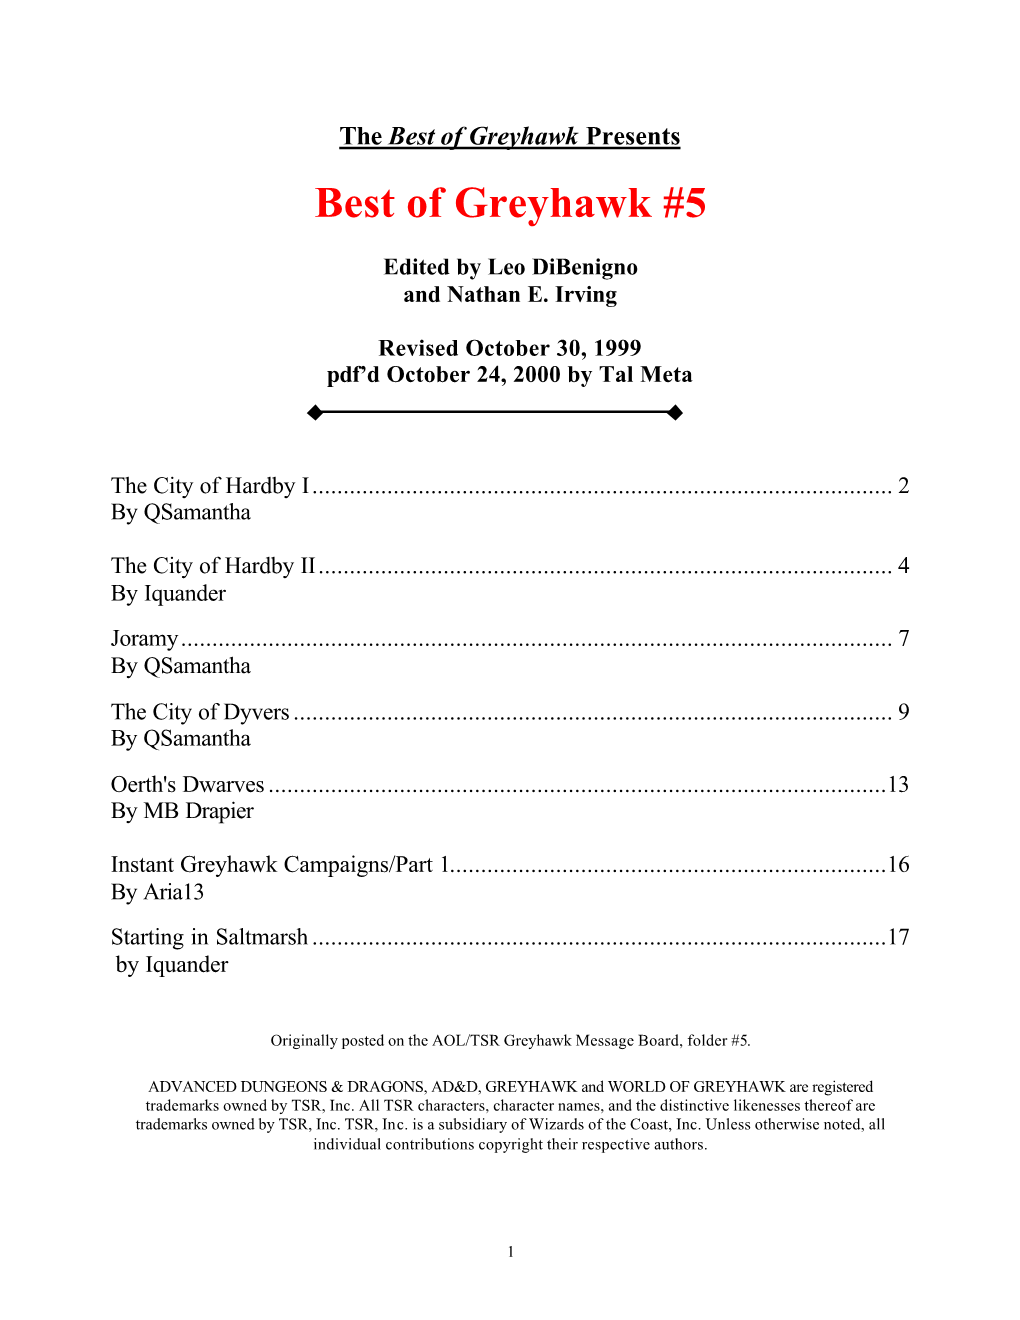 Best of Greyhawk #5